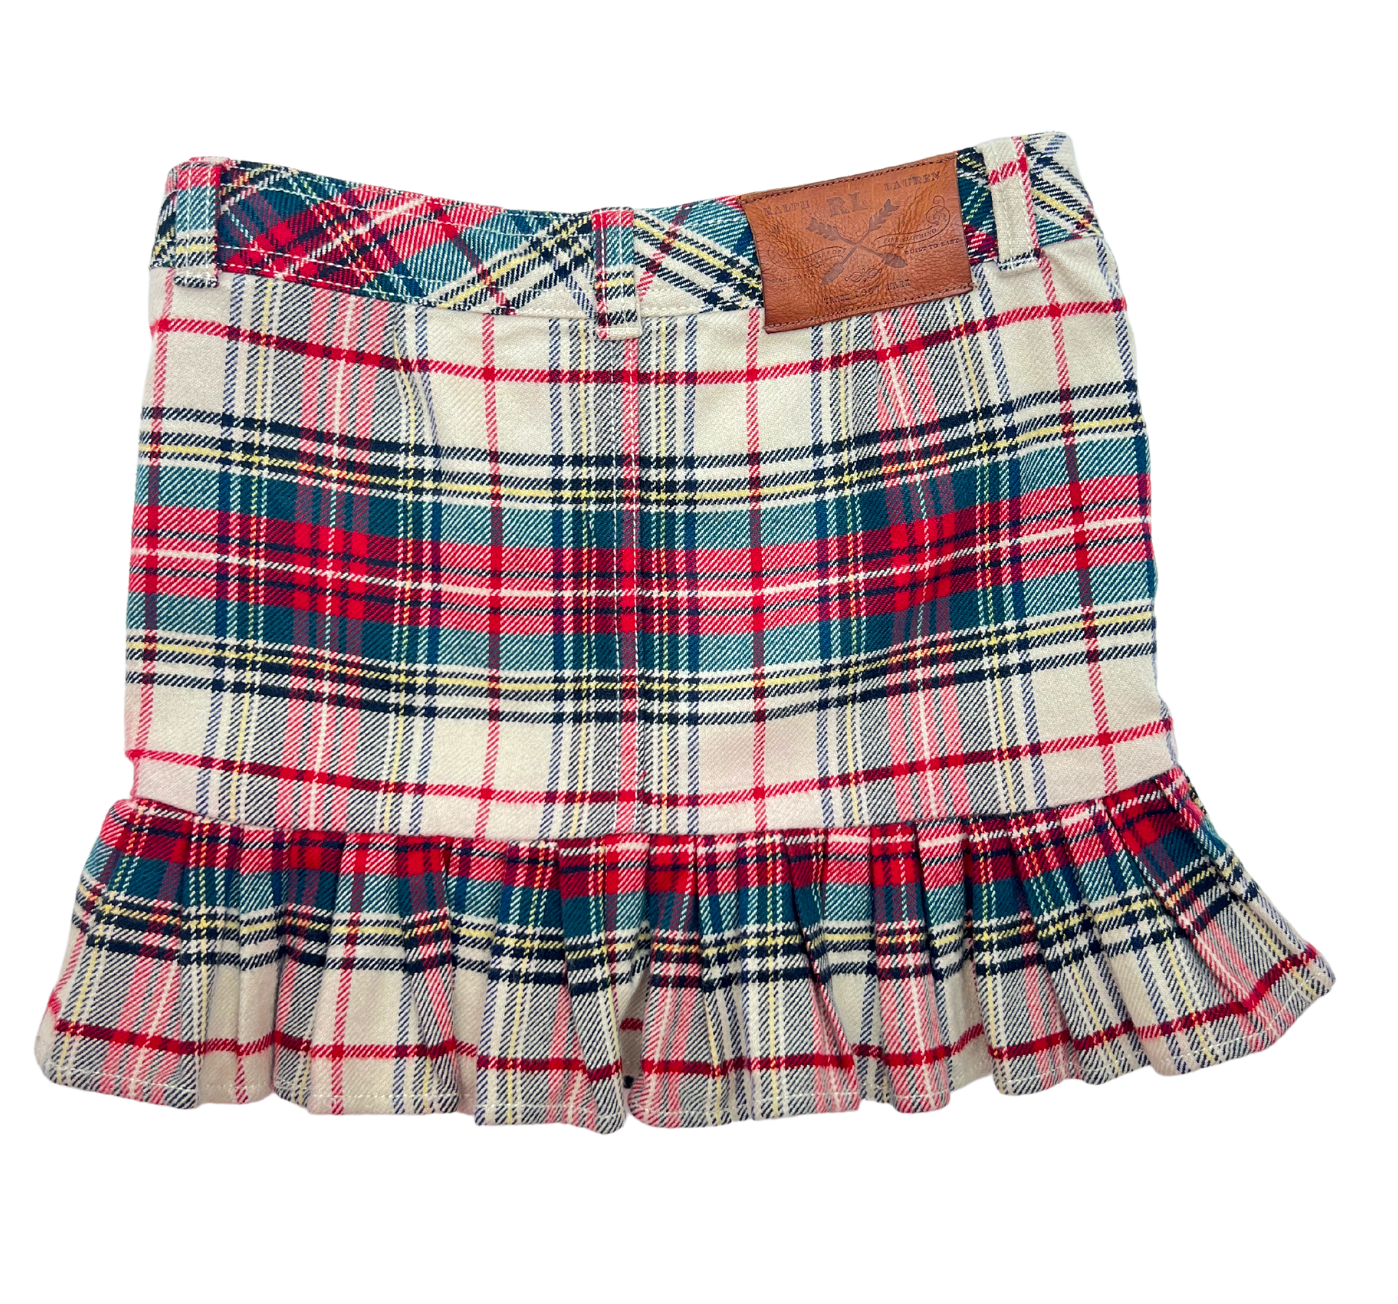 RALPH LAUREN - Plaid skirt - 8 years old